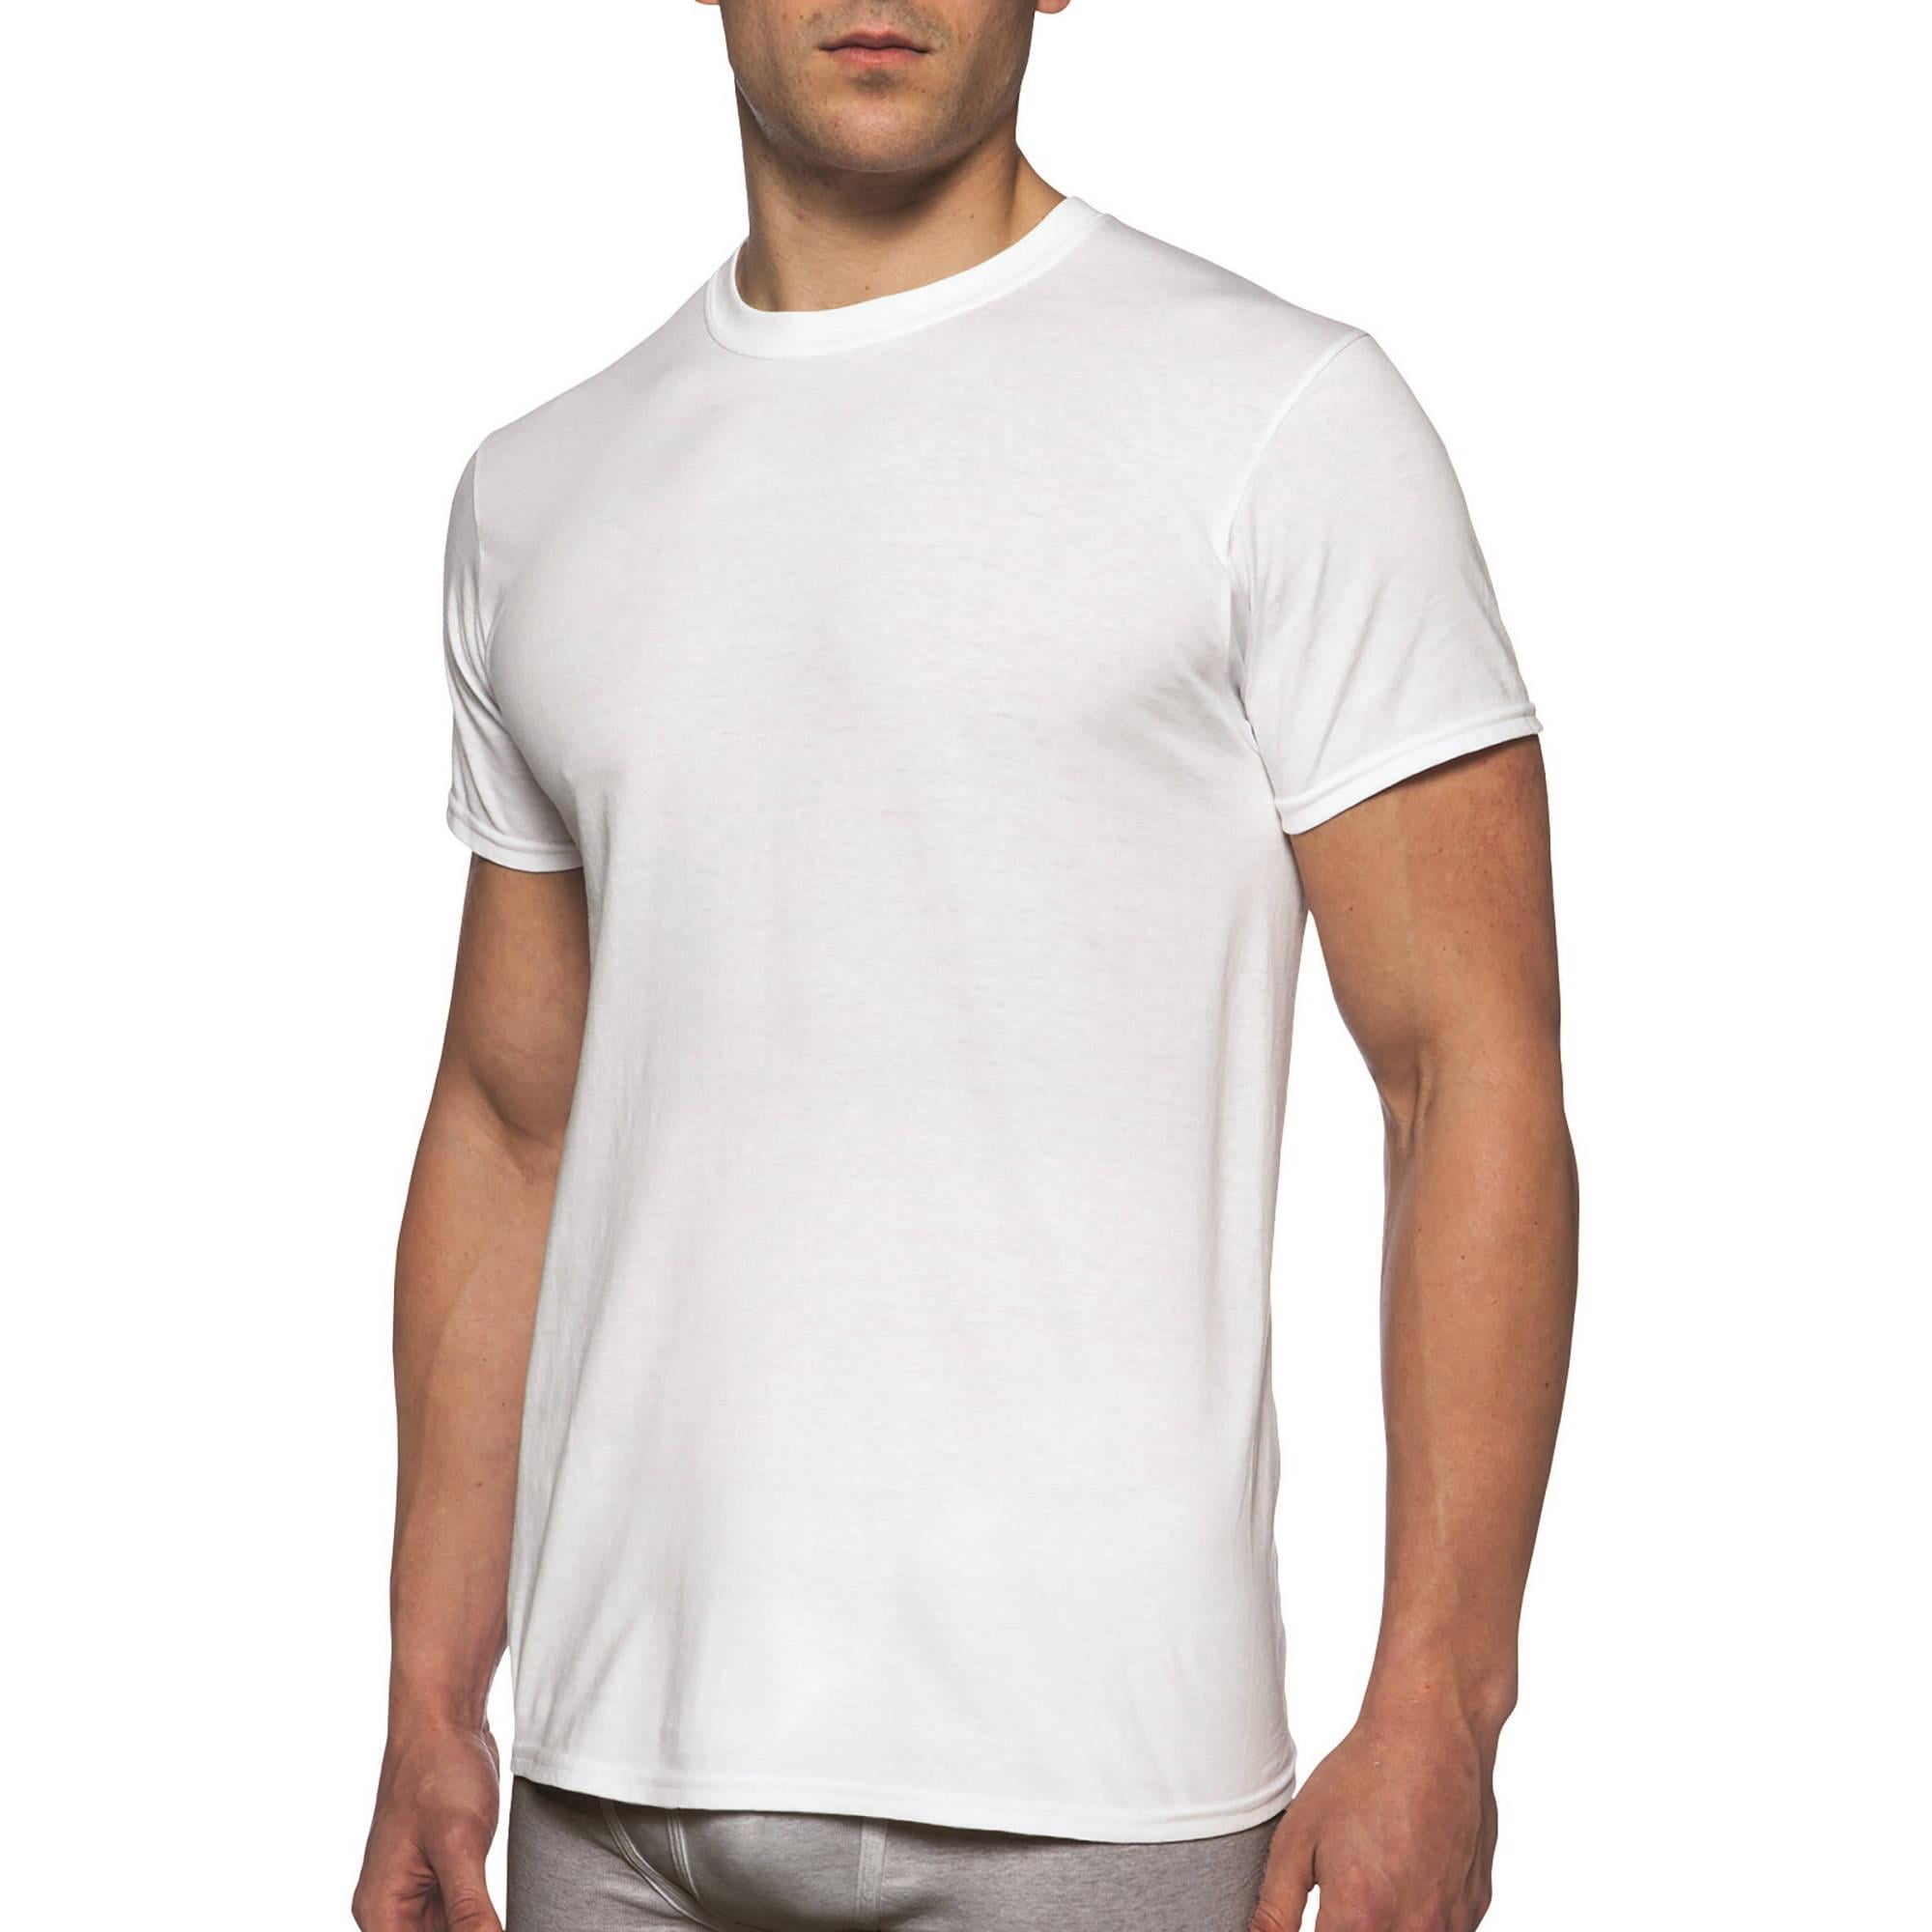 Gildan - Gildan Men's Short Sleeve Crew White T-Shirt